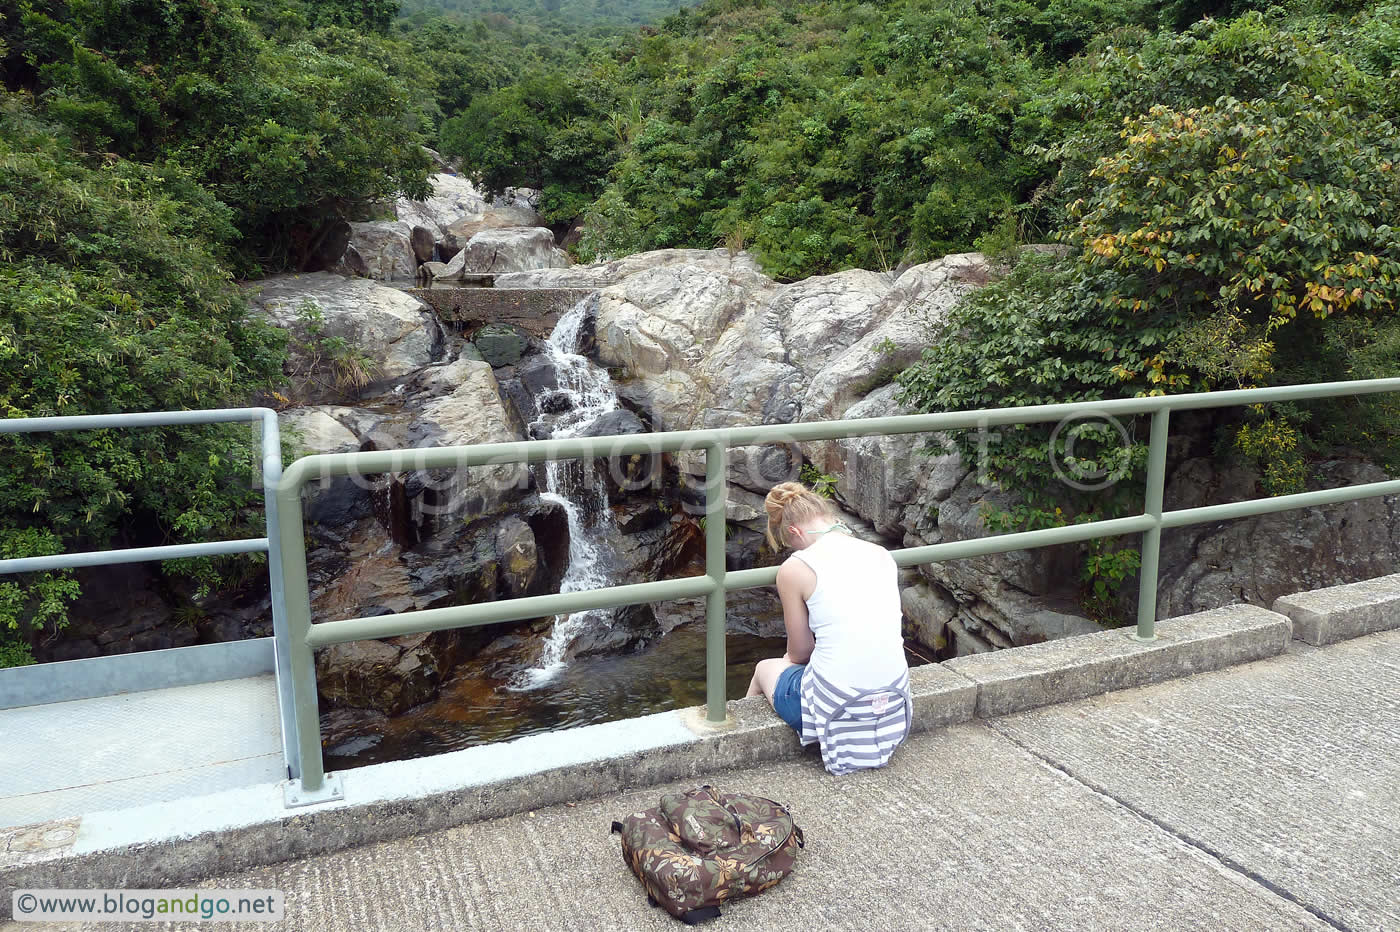 Lantau Trail 11 - Around L118